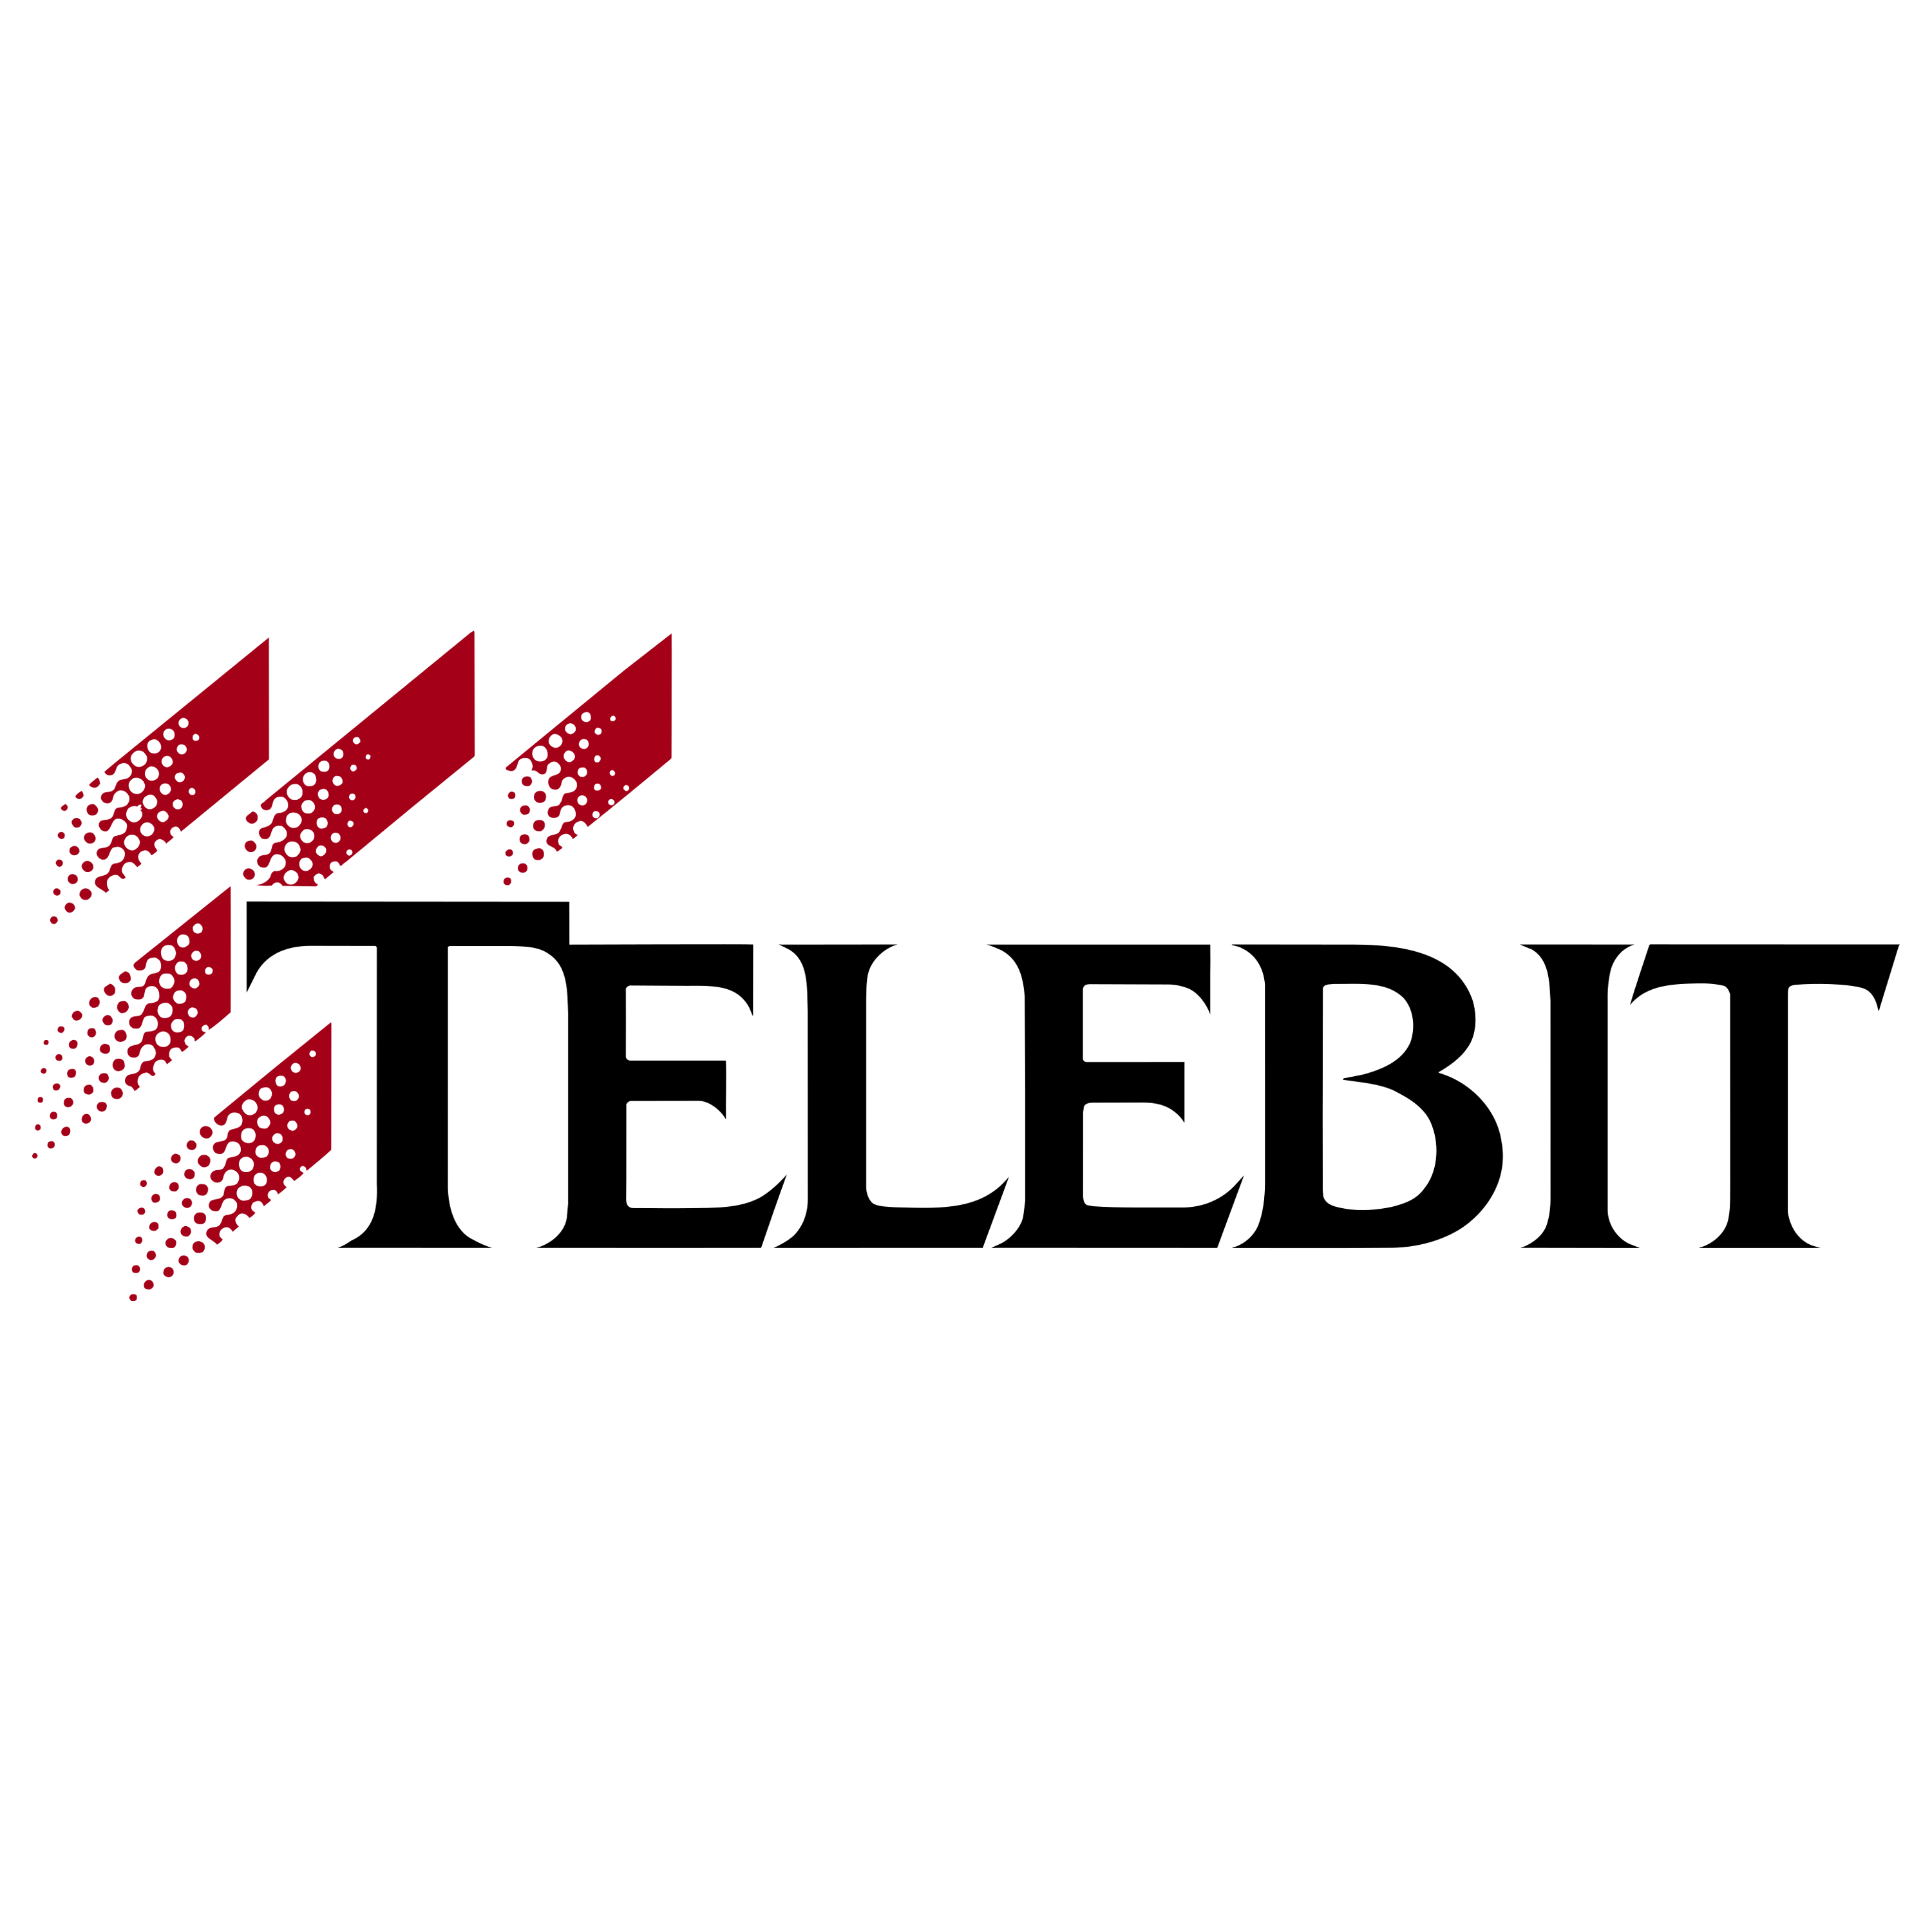 Telebit Logo Transparent Image